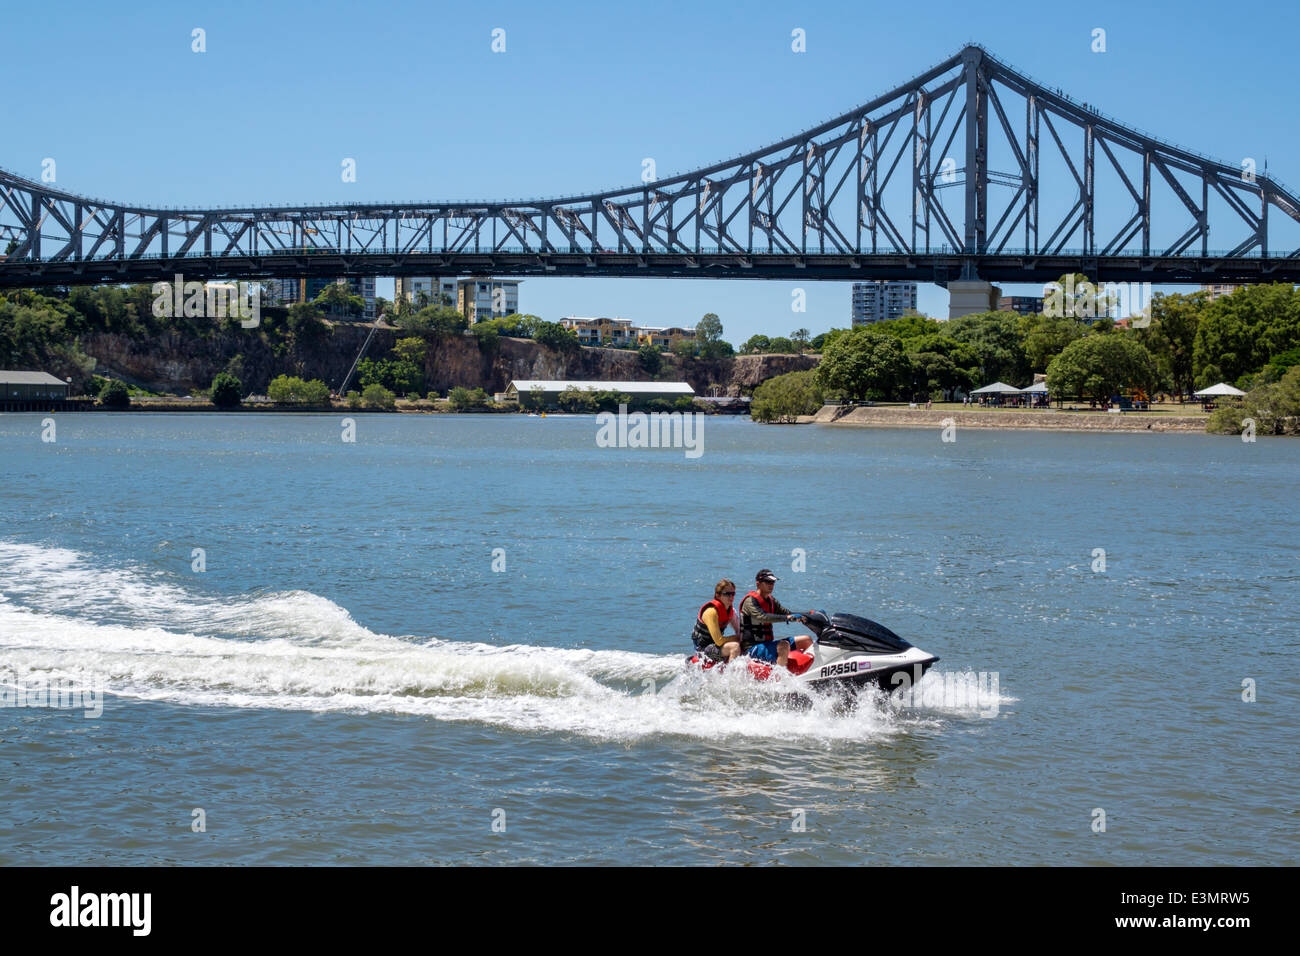 Brisbane Australia,Brisbane River,Story Bridge,wave runner,jet ski,man men male,riding,passenger passengers rider riders,AU140316013 Stock Photo